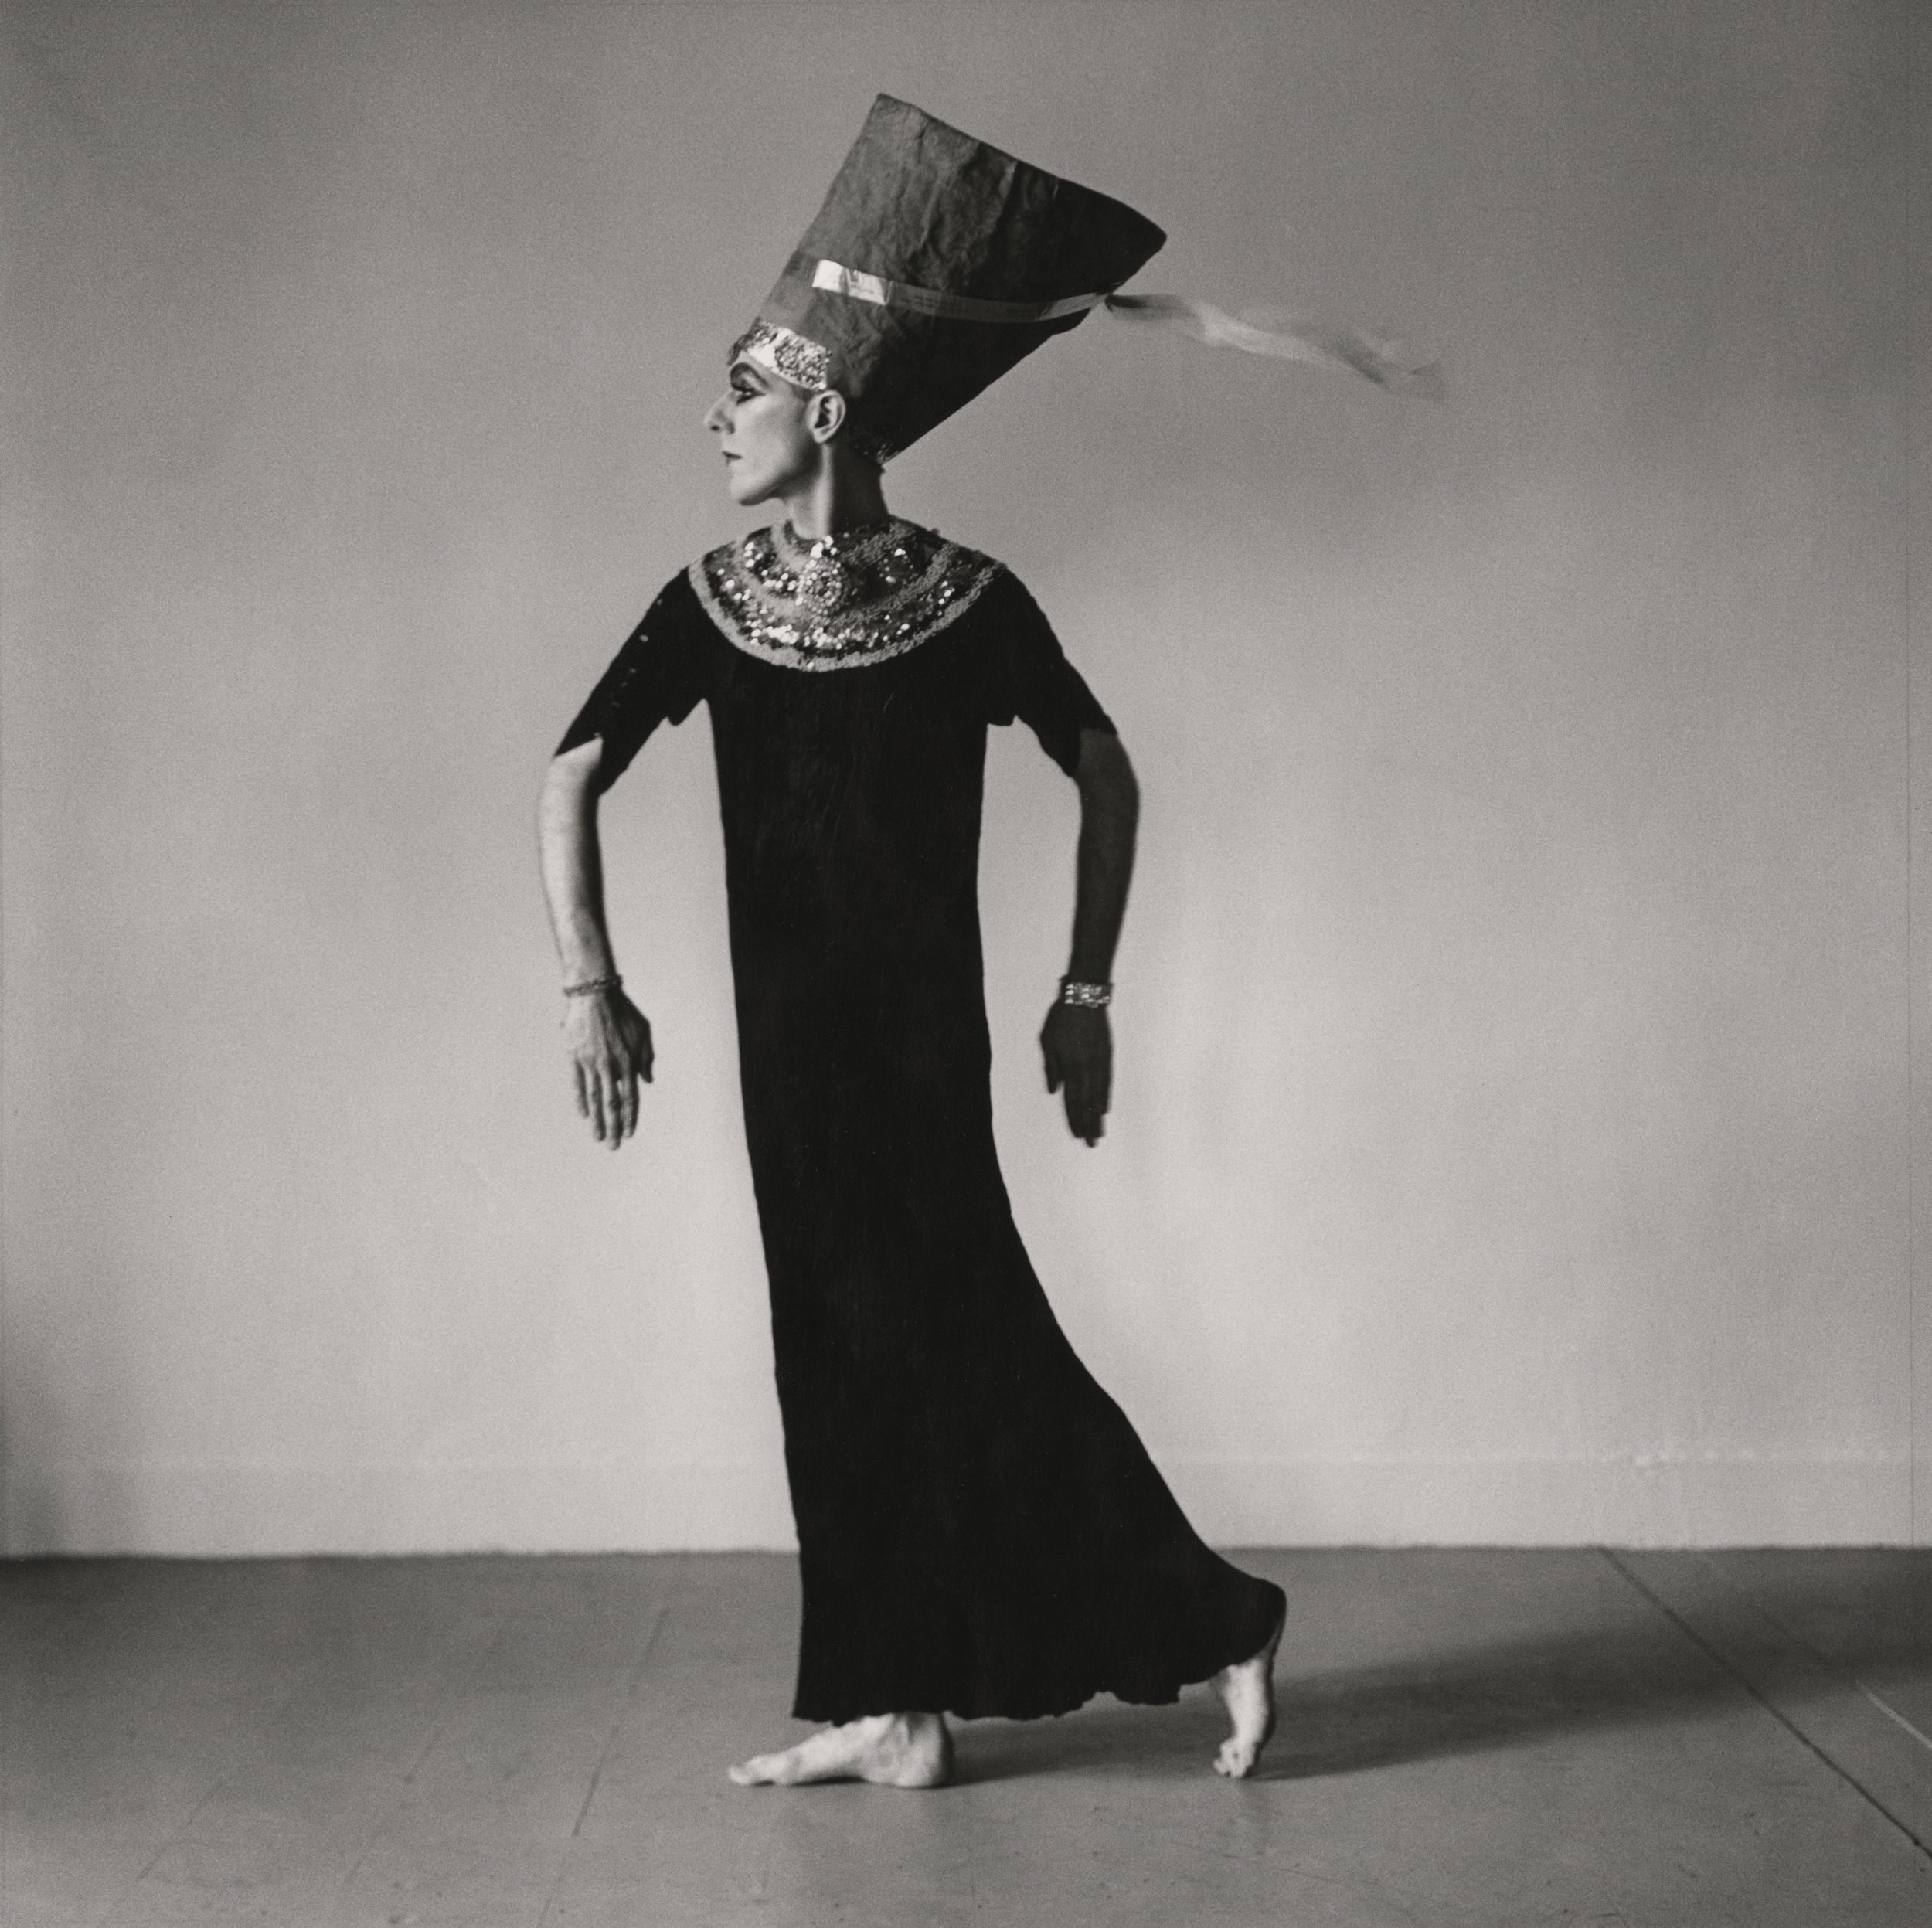 Black and white photograph of female impersonator in costume as Nefertiti